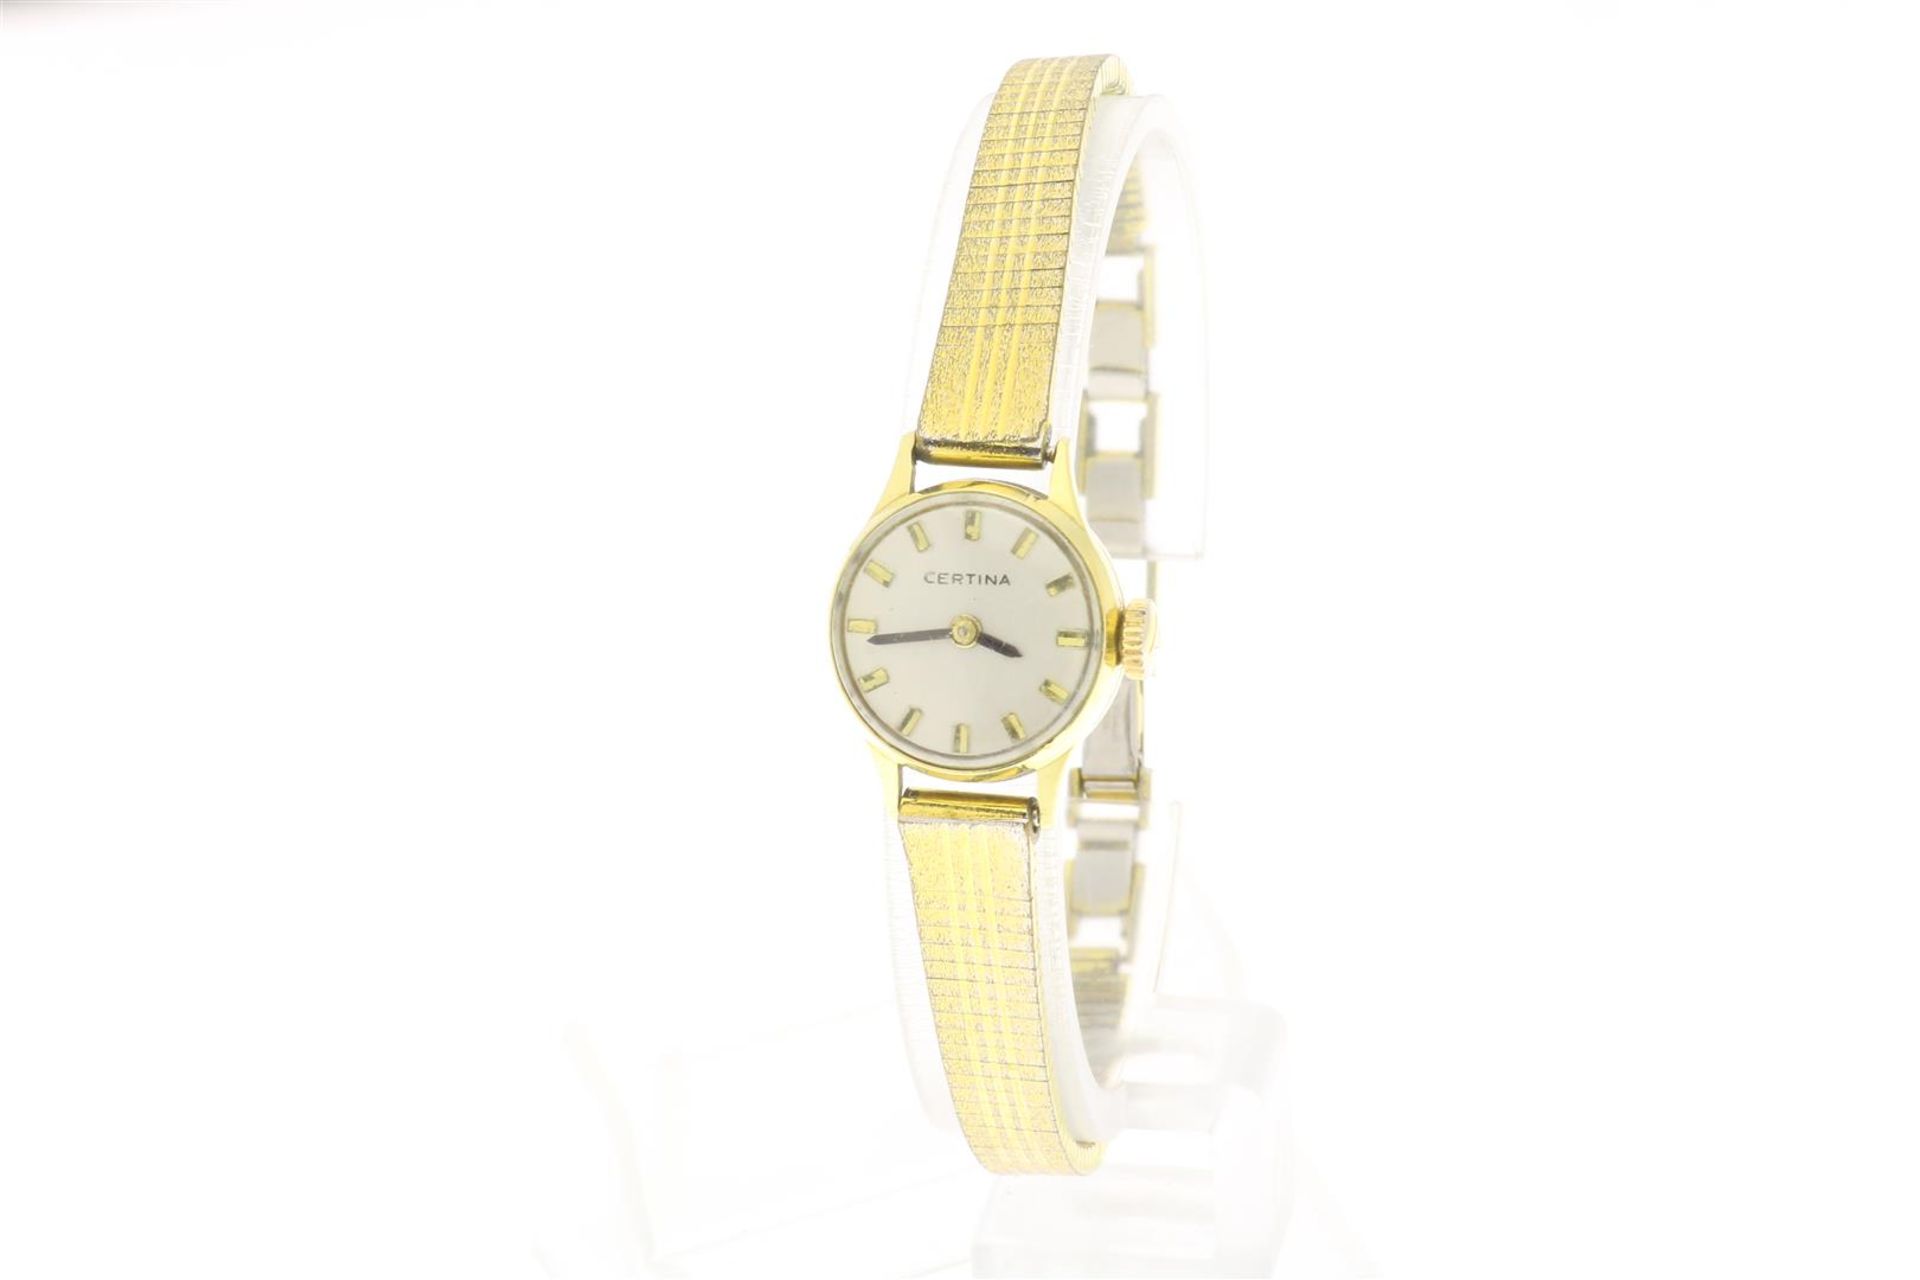 Certina yellow gold ladies wristwatch on flex strap, stainless steel, grade 585/000.